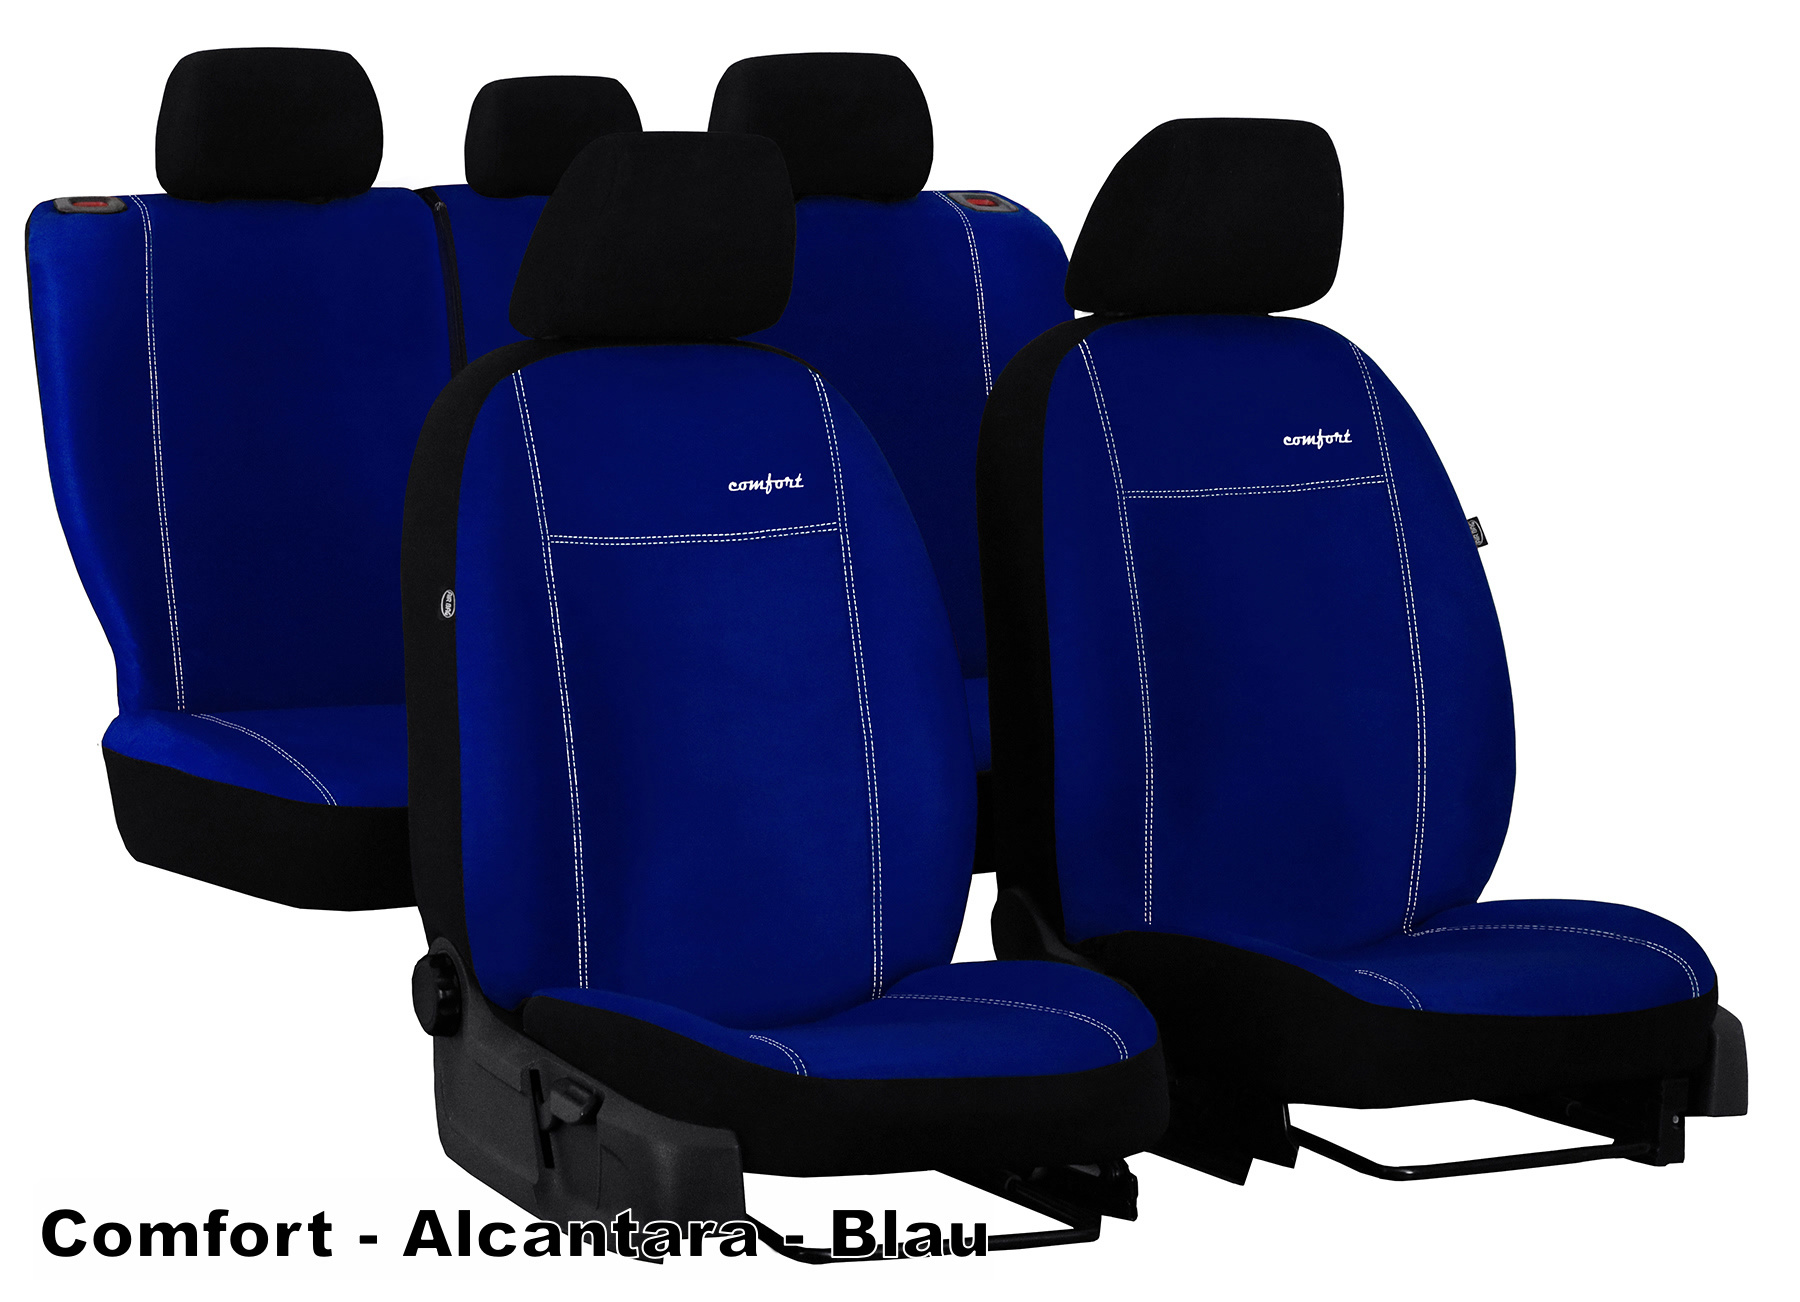 Maßgefertigter Stoff Sitzbezug Ford Kuga - Maluch Premium Autozubehör